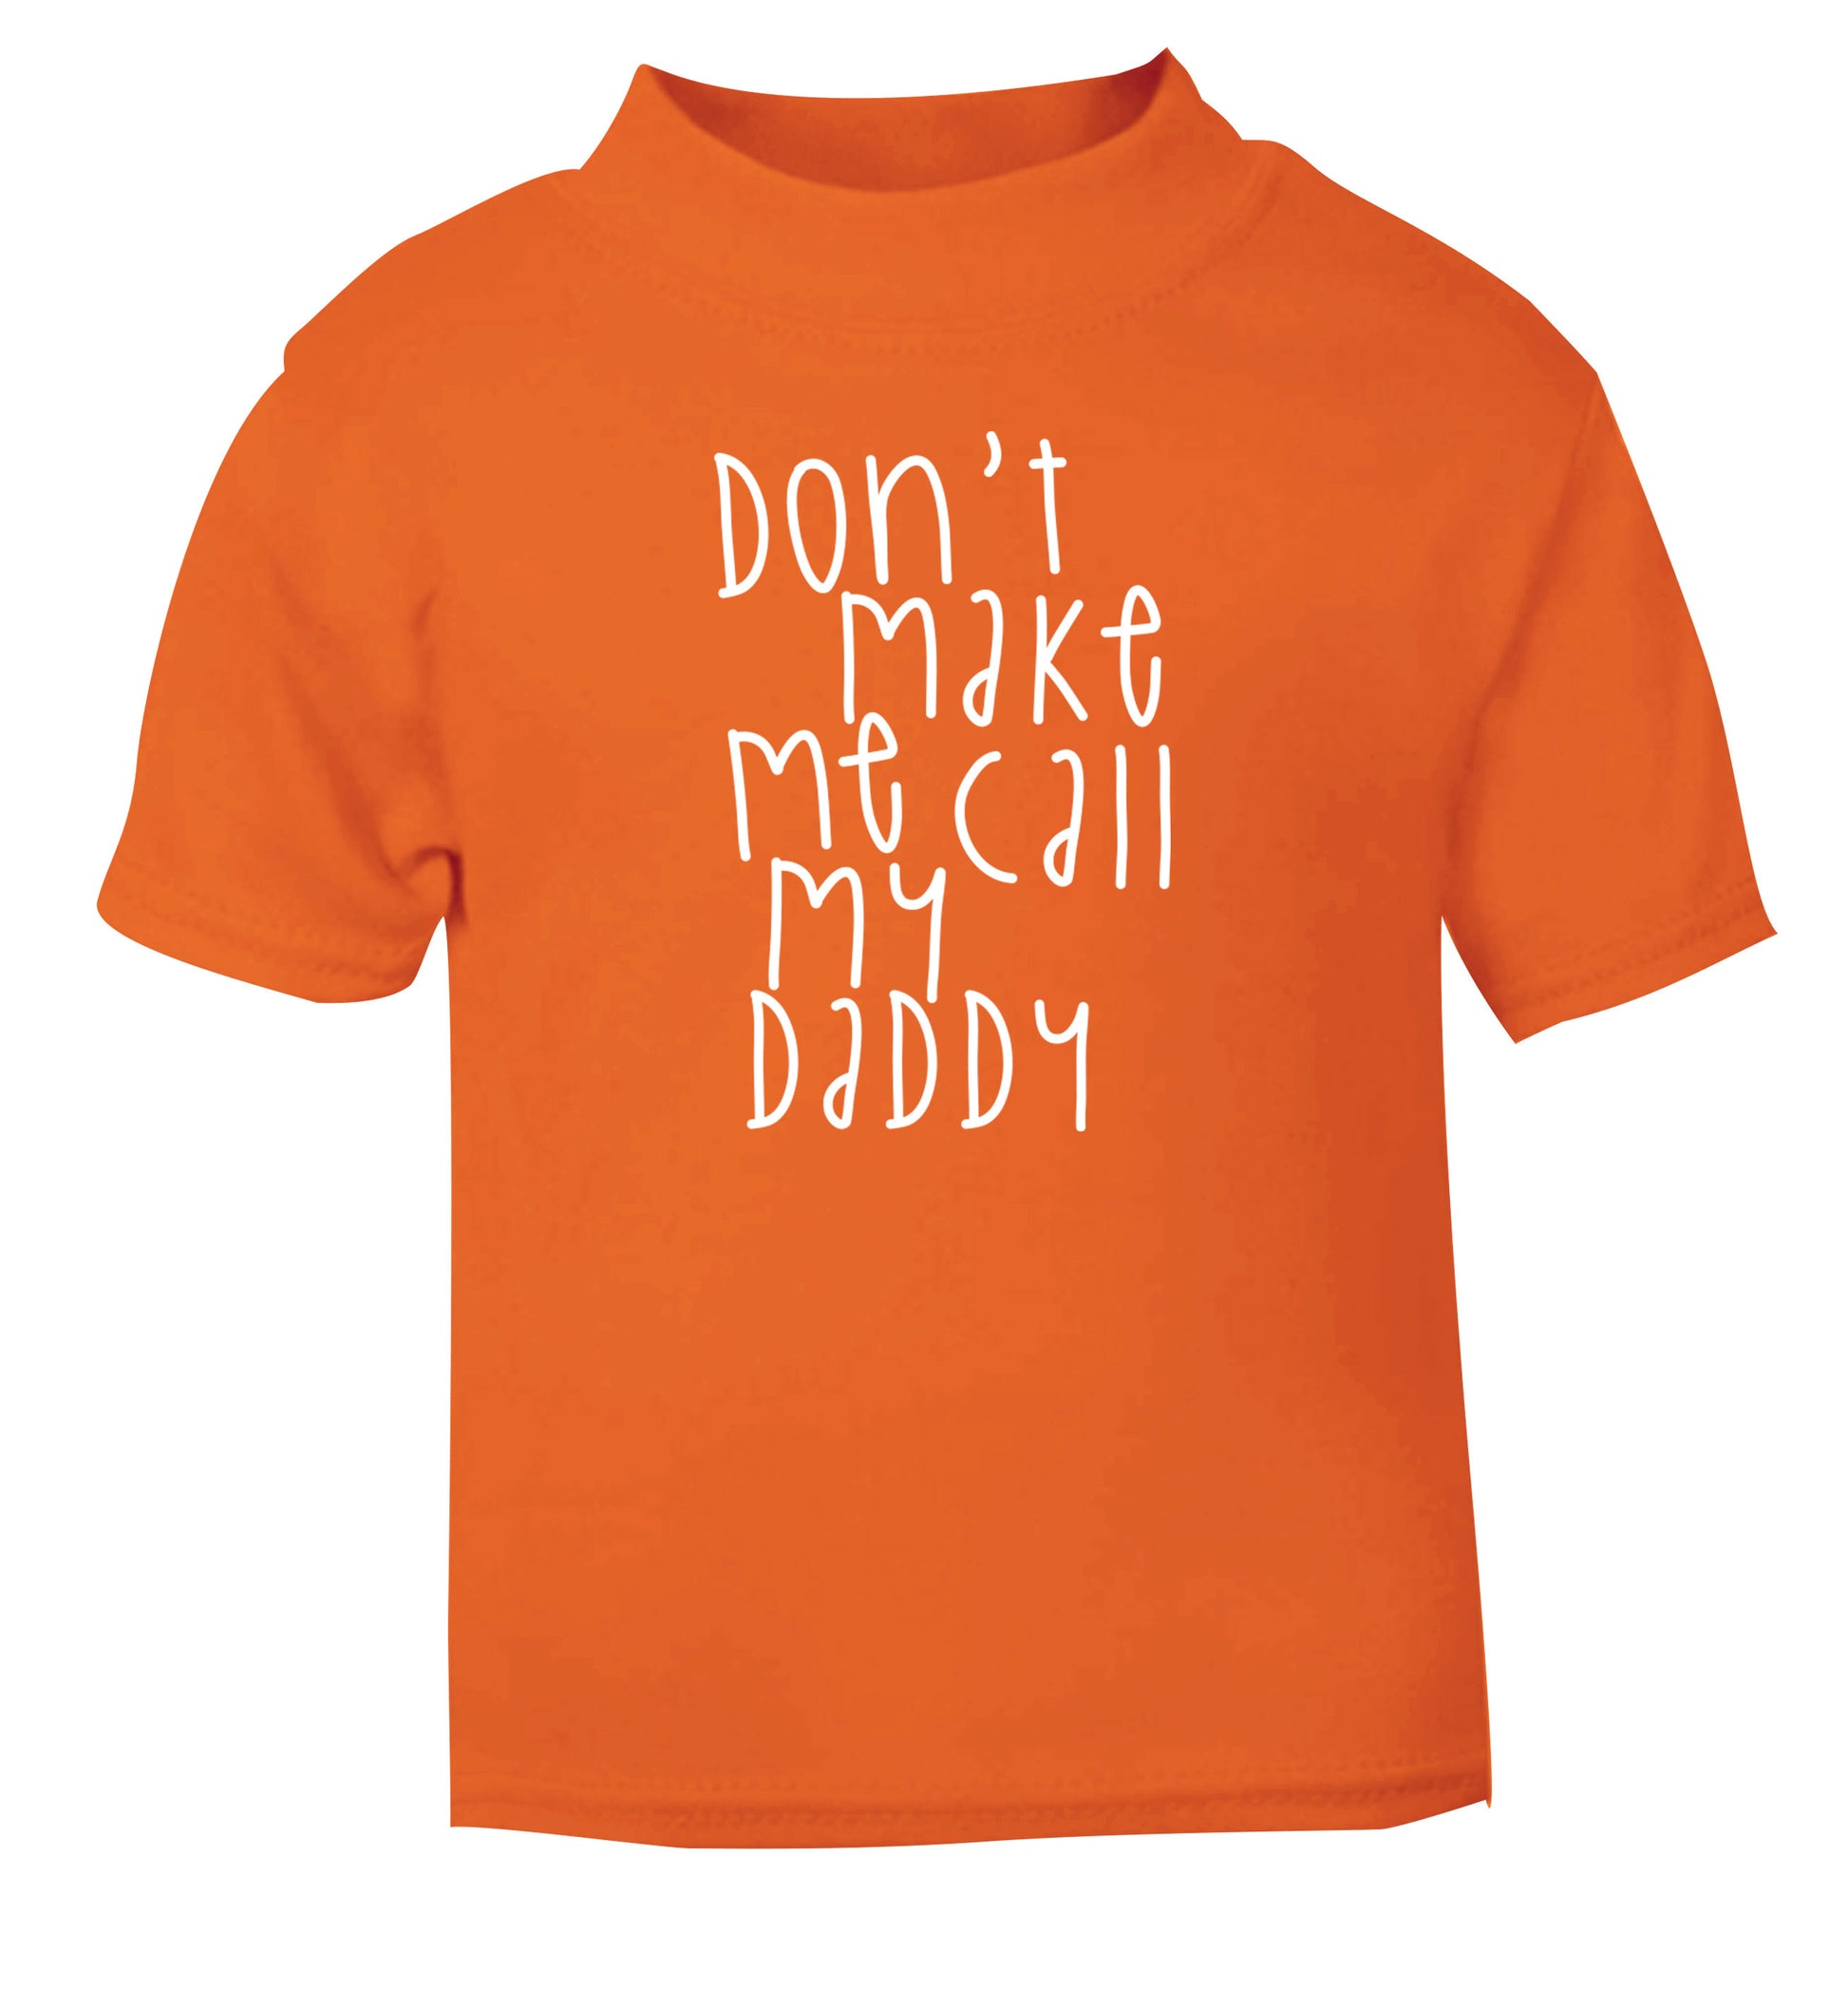 Don't make me call my daddy orange Baby Toddler Tshirt 2 Years